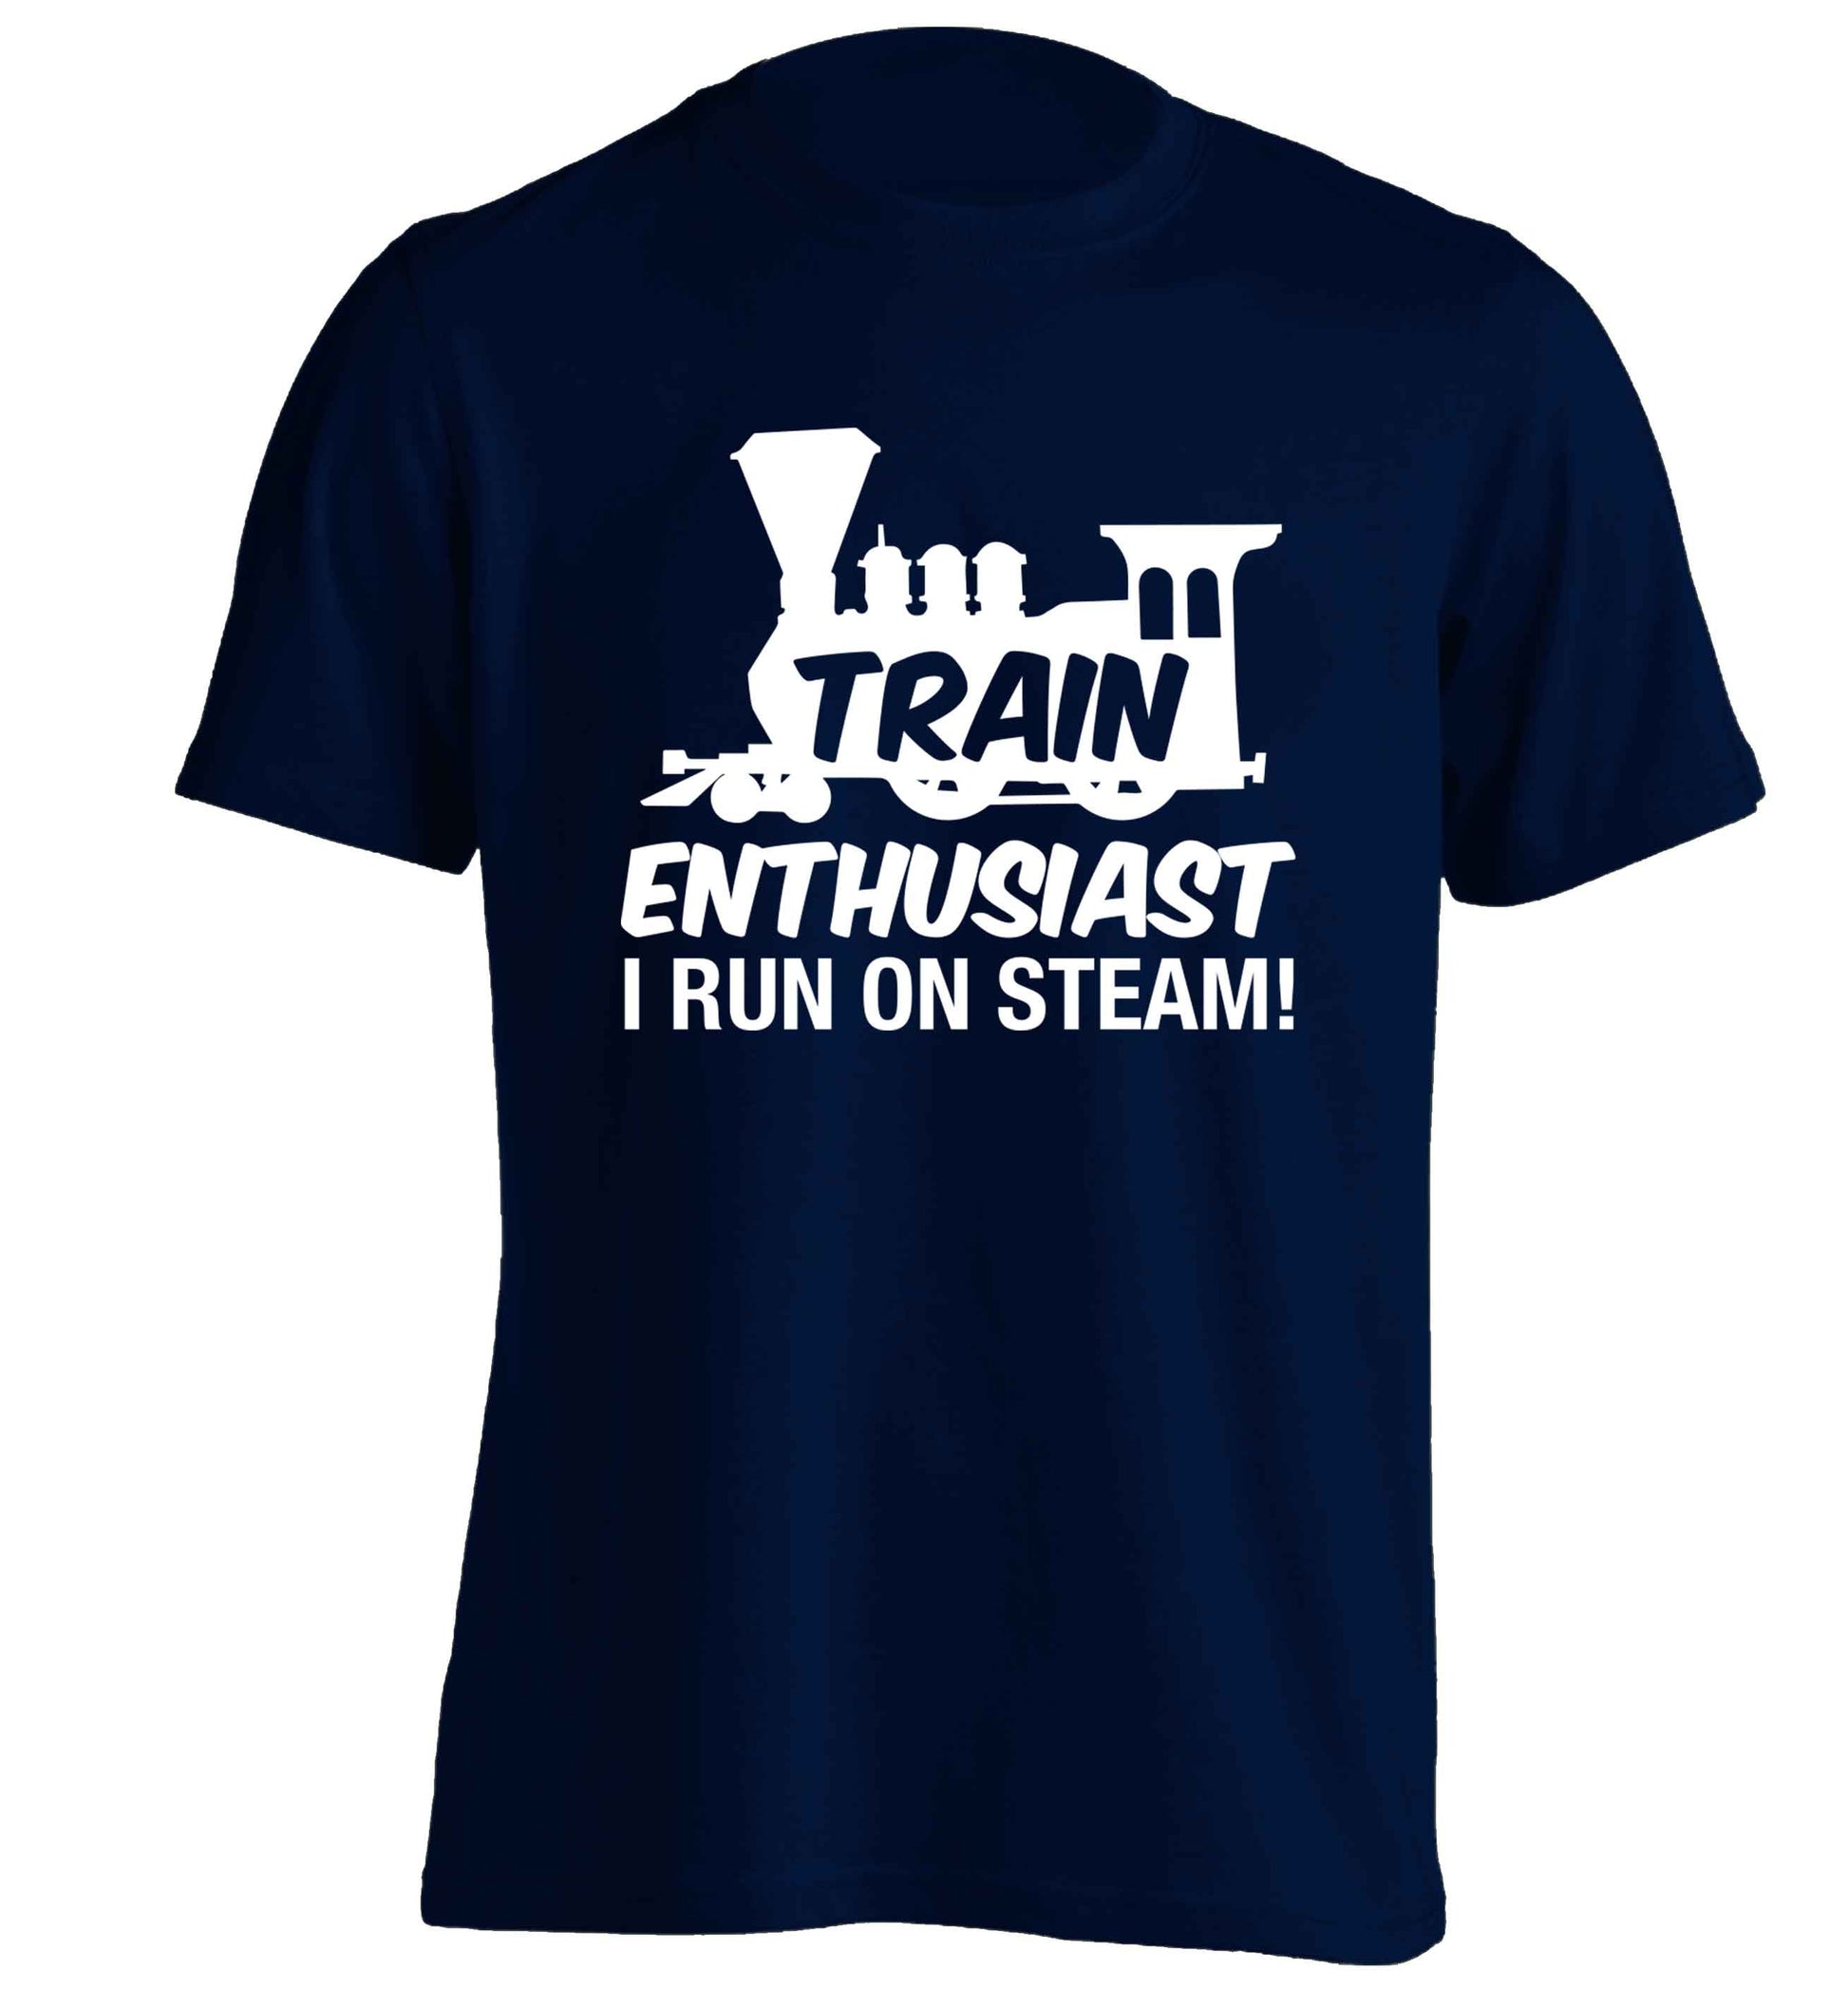 Train enthusiast I run on steam adults unisex navy Tshirt 2XL